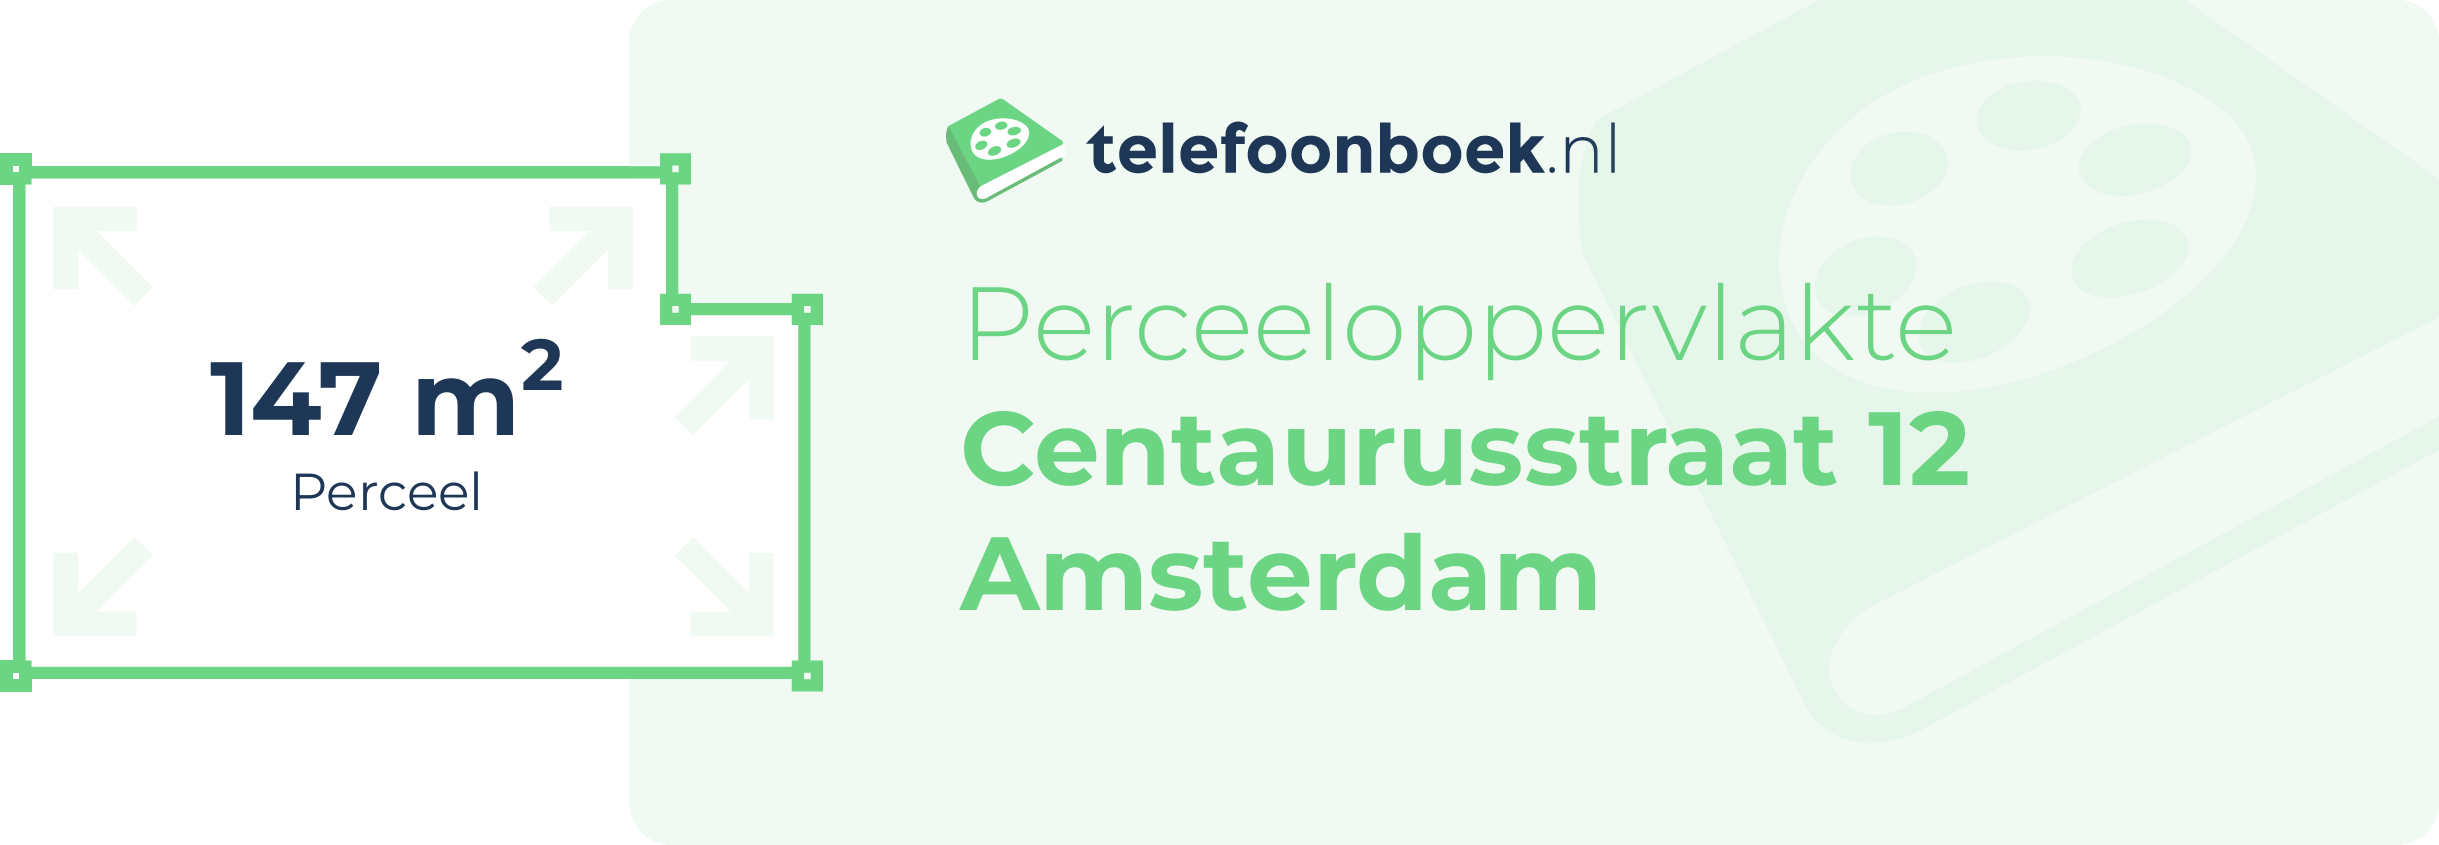 Perceeloppervlakte Centaurusstraat 12 Amsterdam